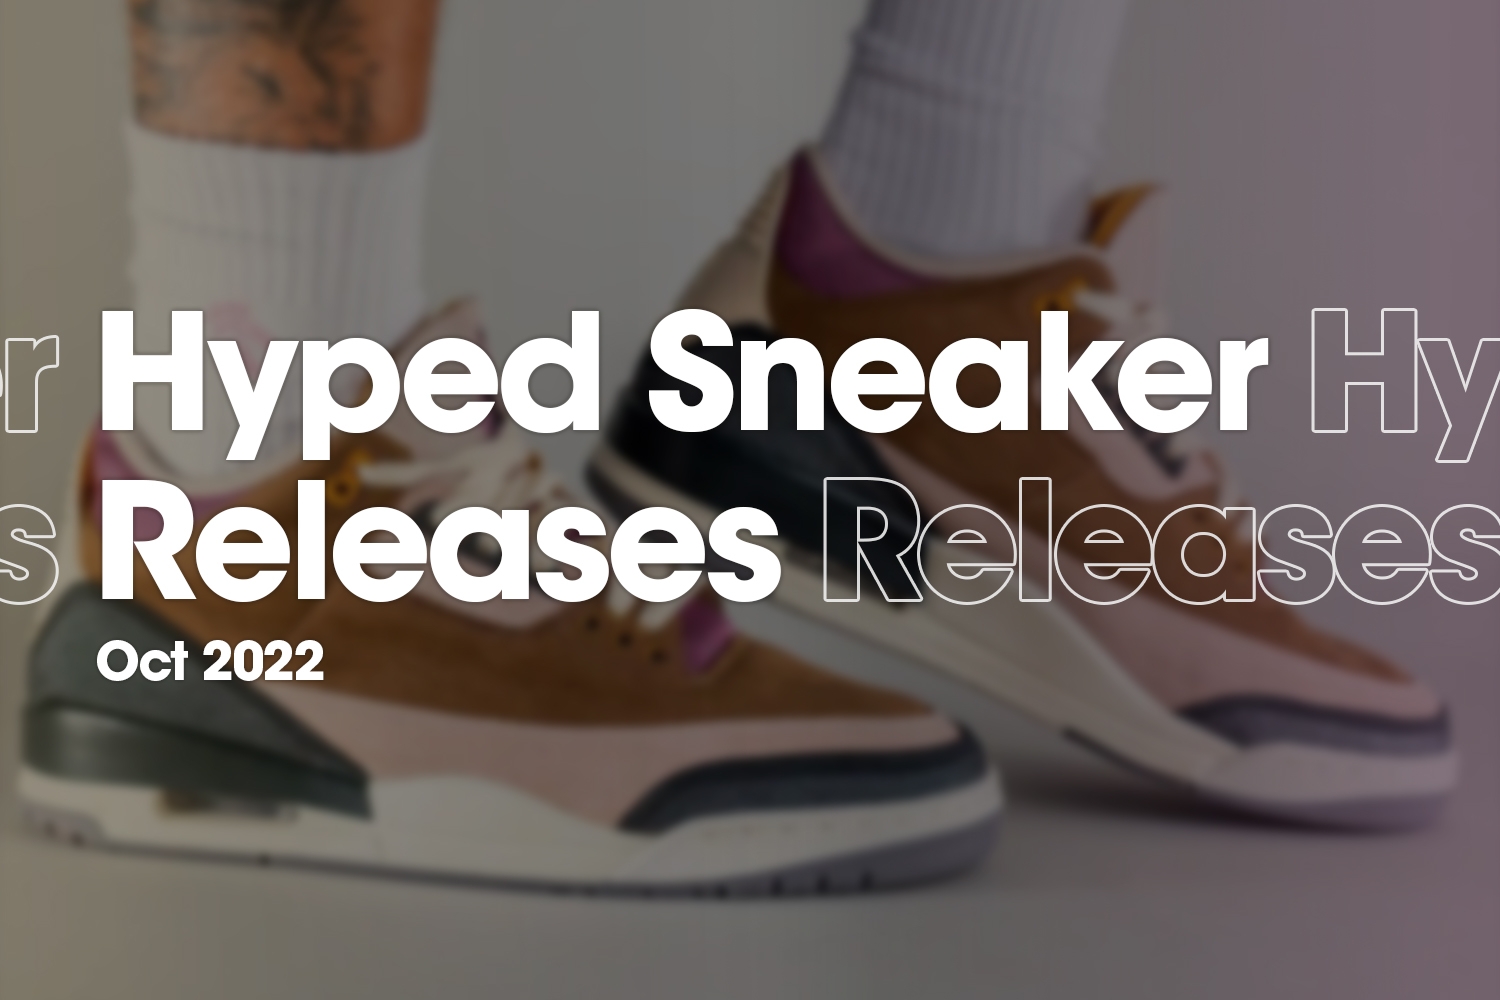 Hyped Sneaker Releases van oktober 2022